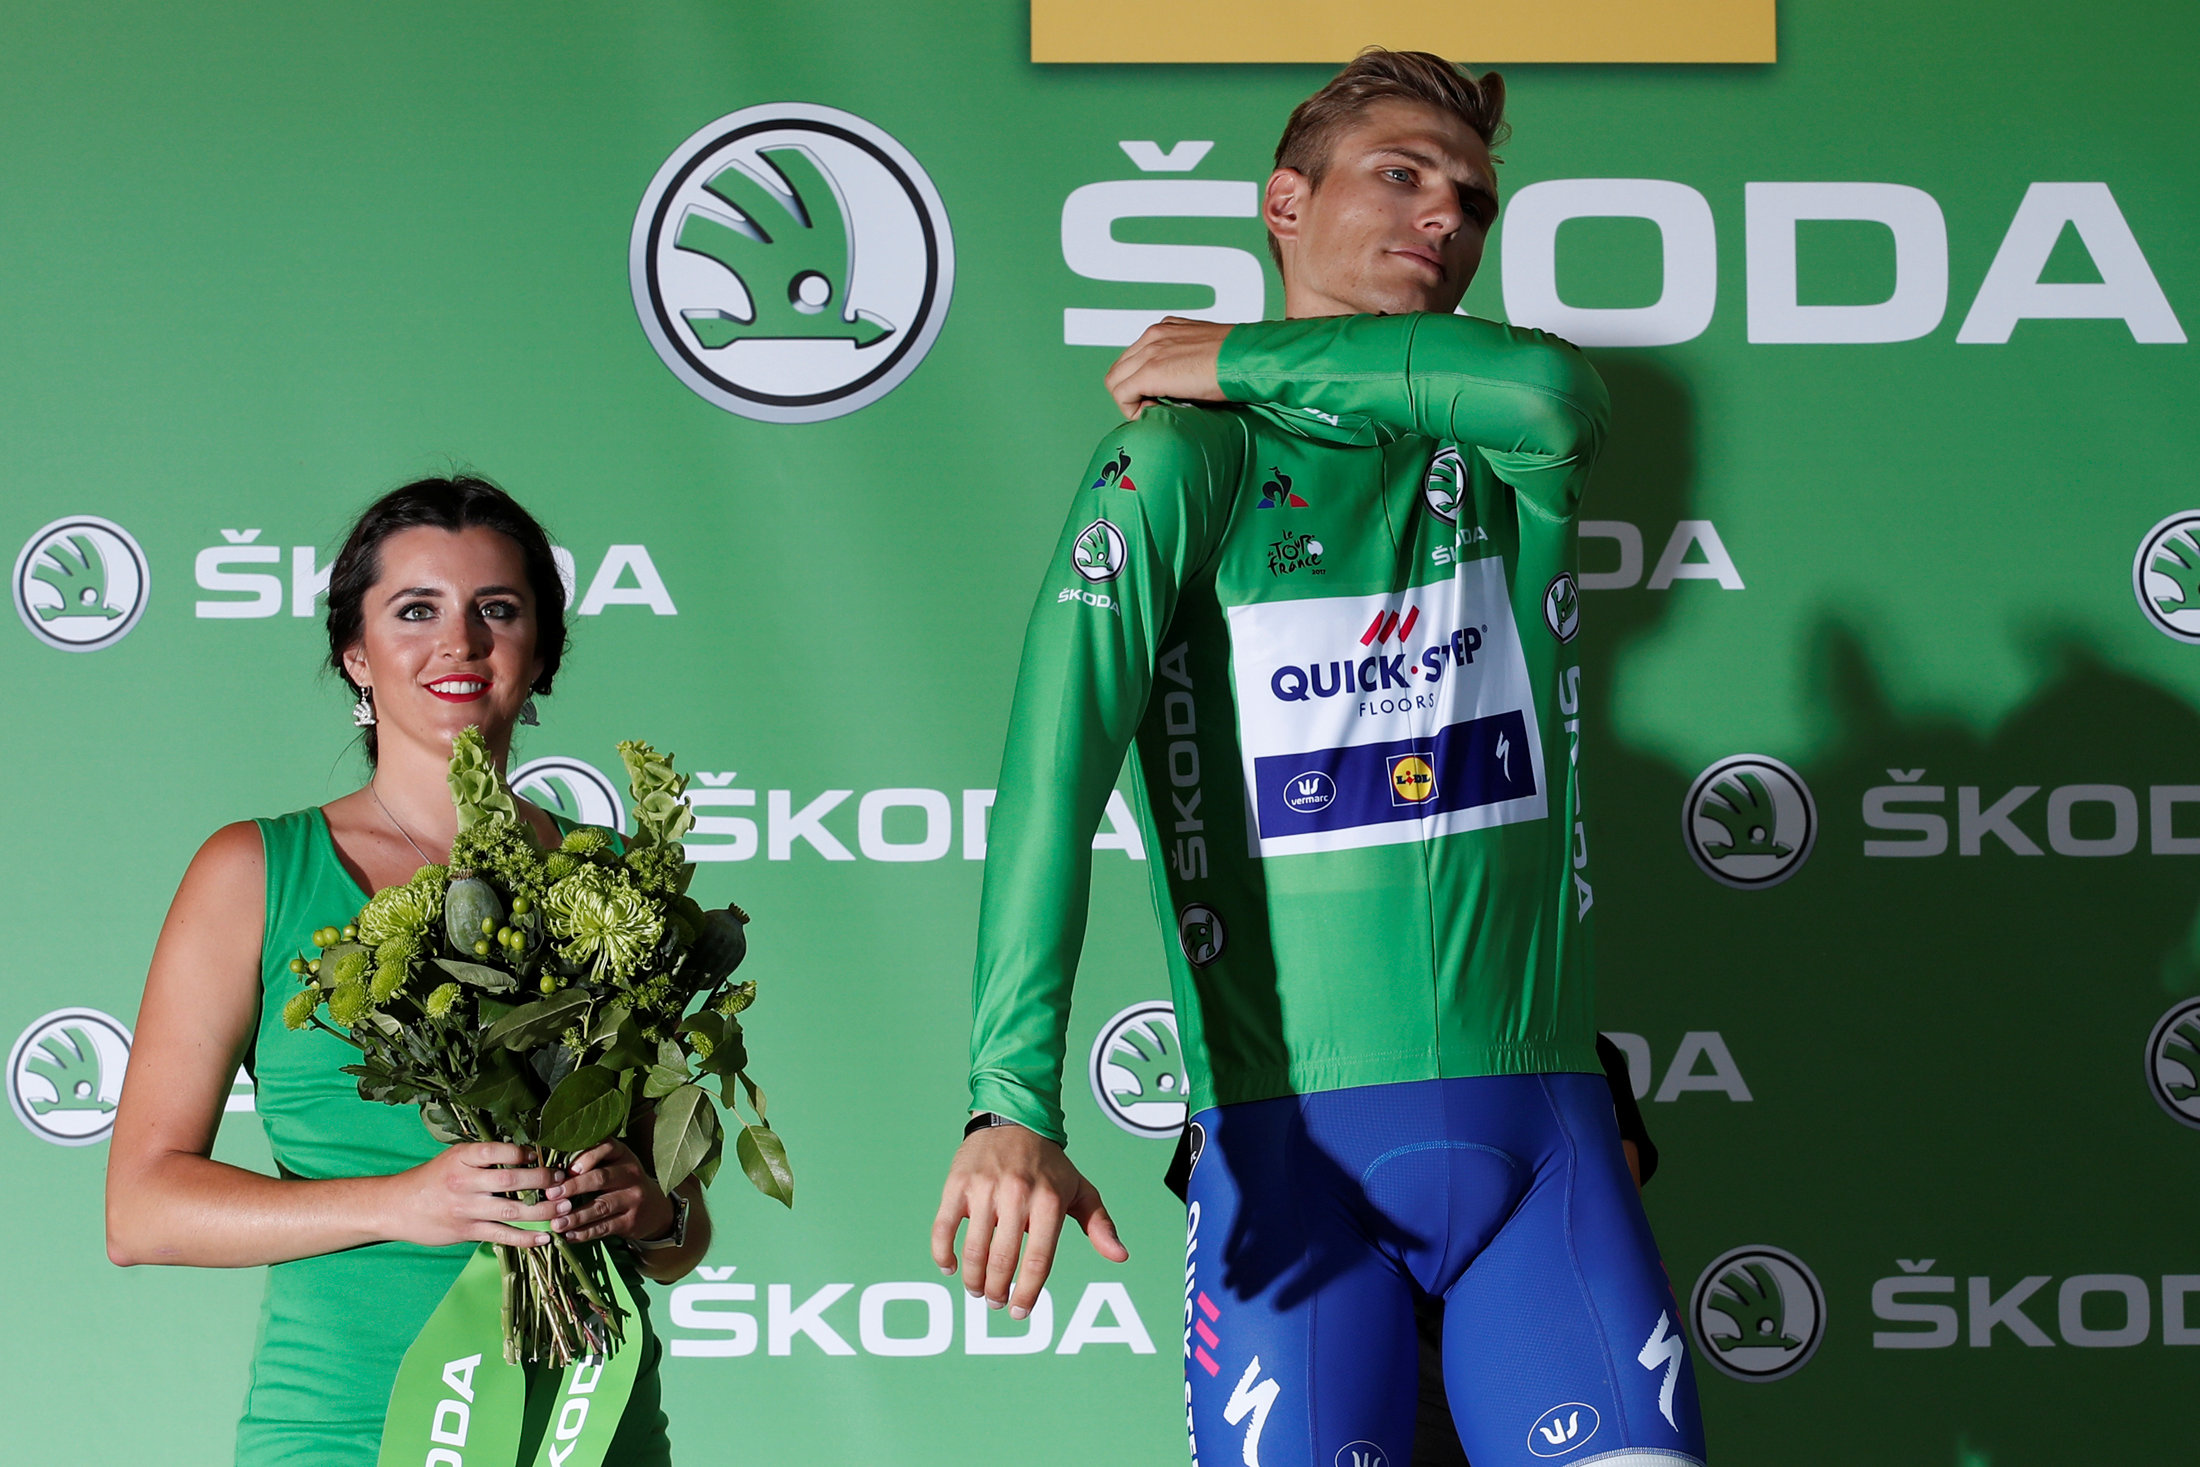 Cycling: Marcel Kittel abandons Tour de France